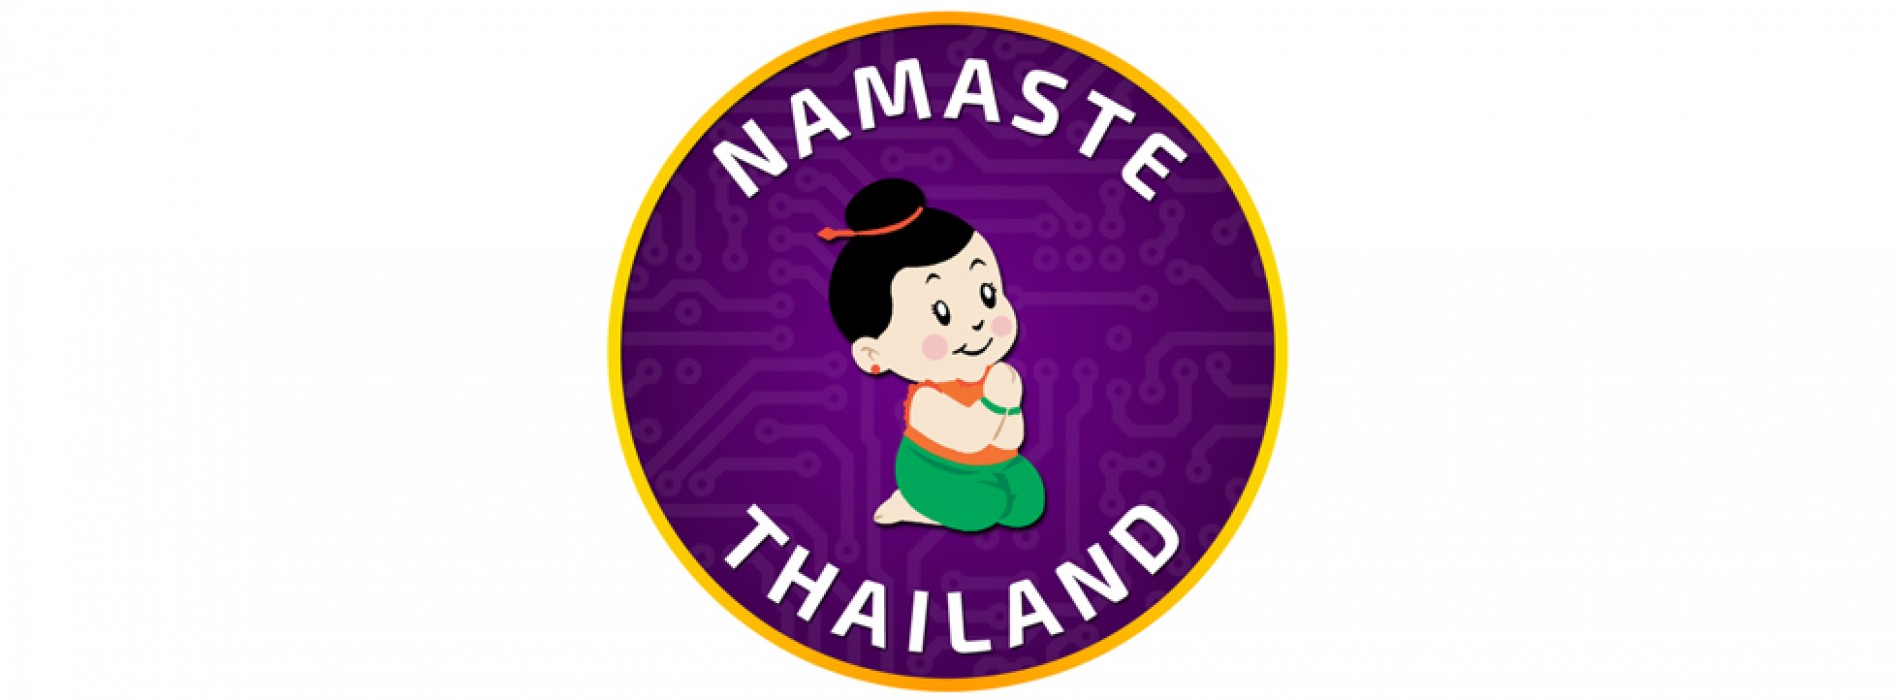 Namaste Thailand 2016 – Discovery of “Modern Thailand” via Social Media